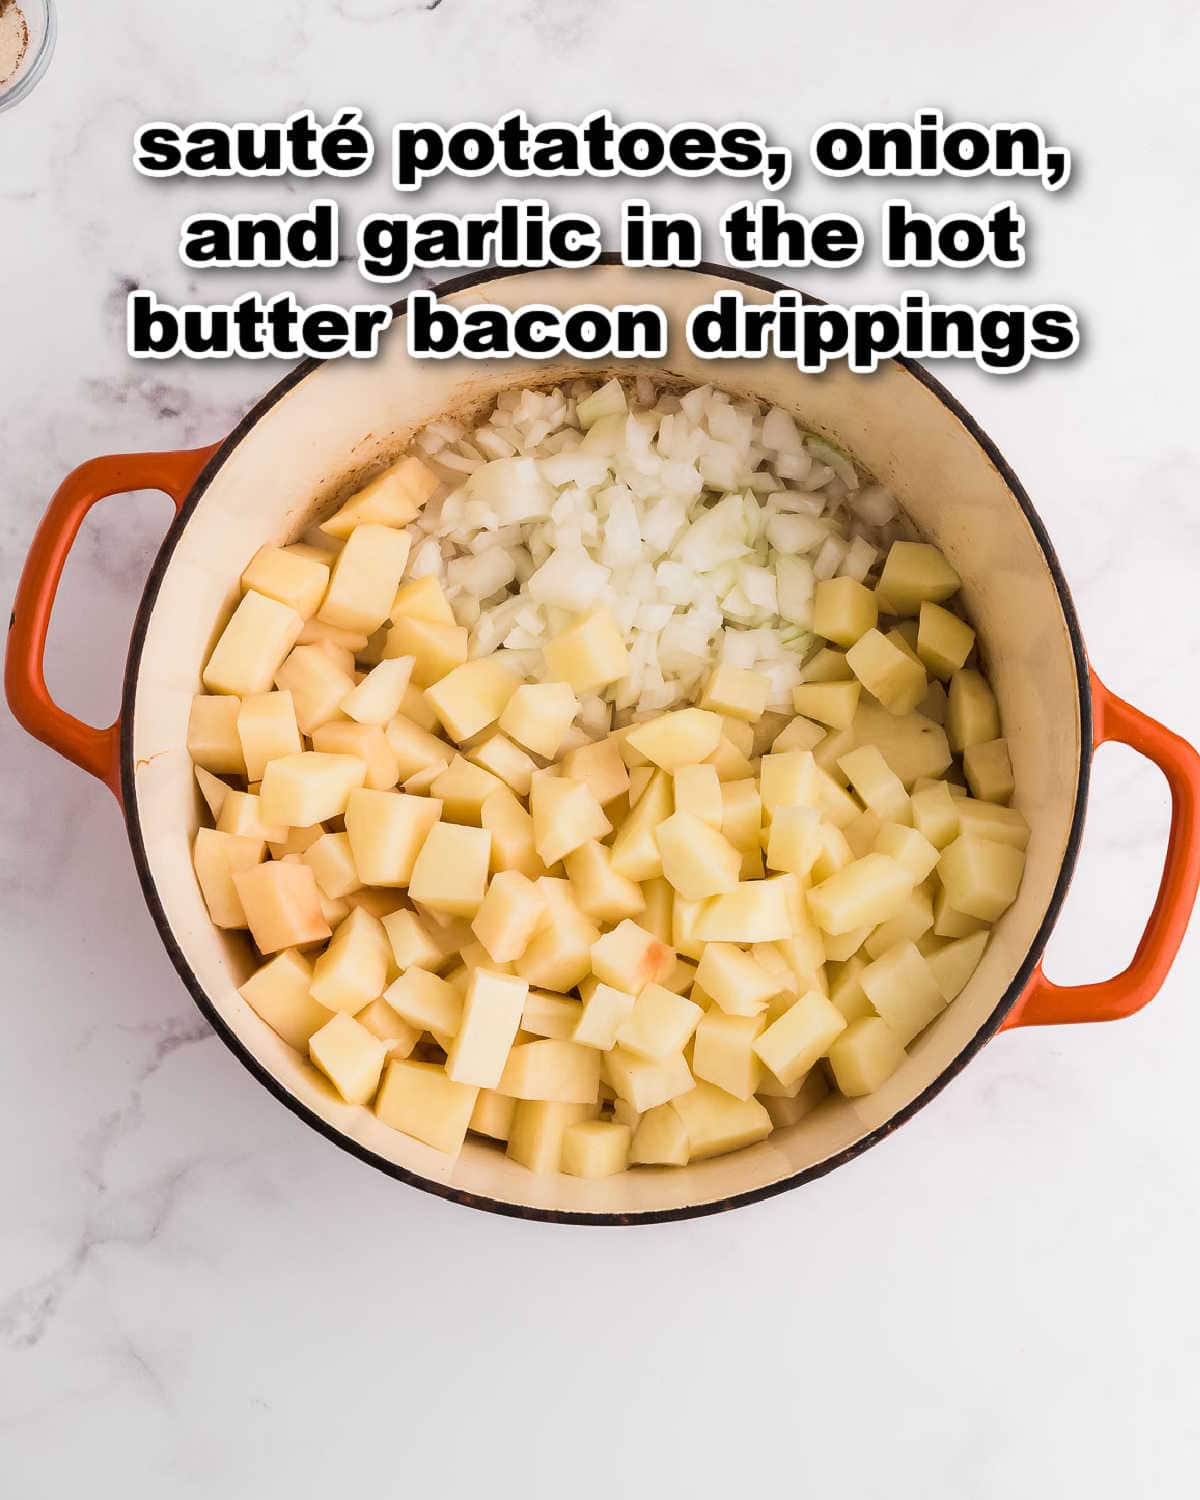 Step: Add onion, garlic, and potatoes.